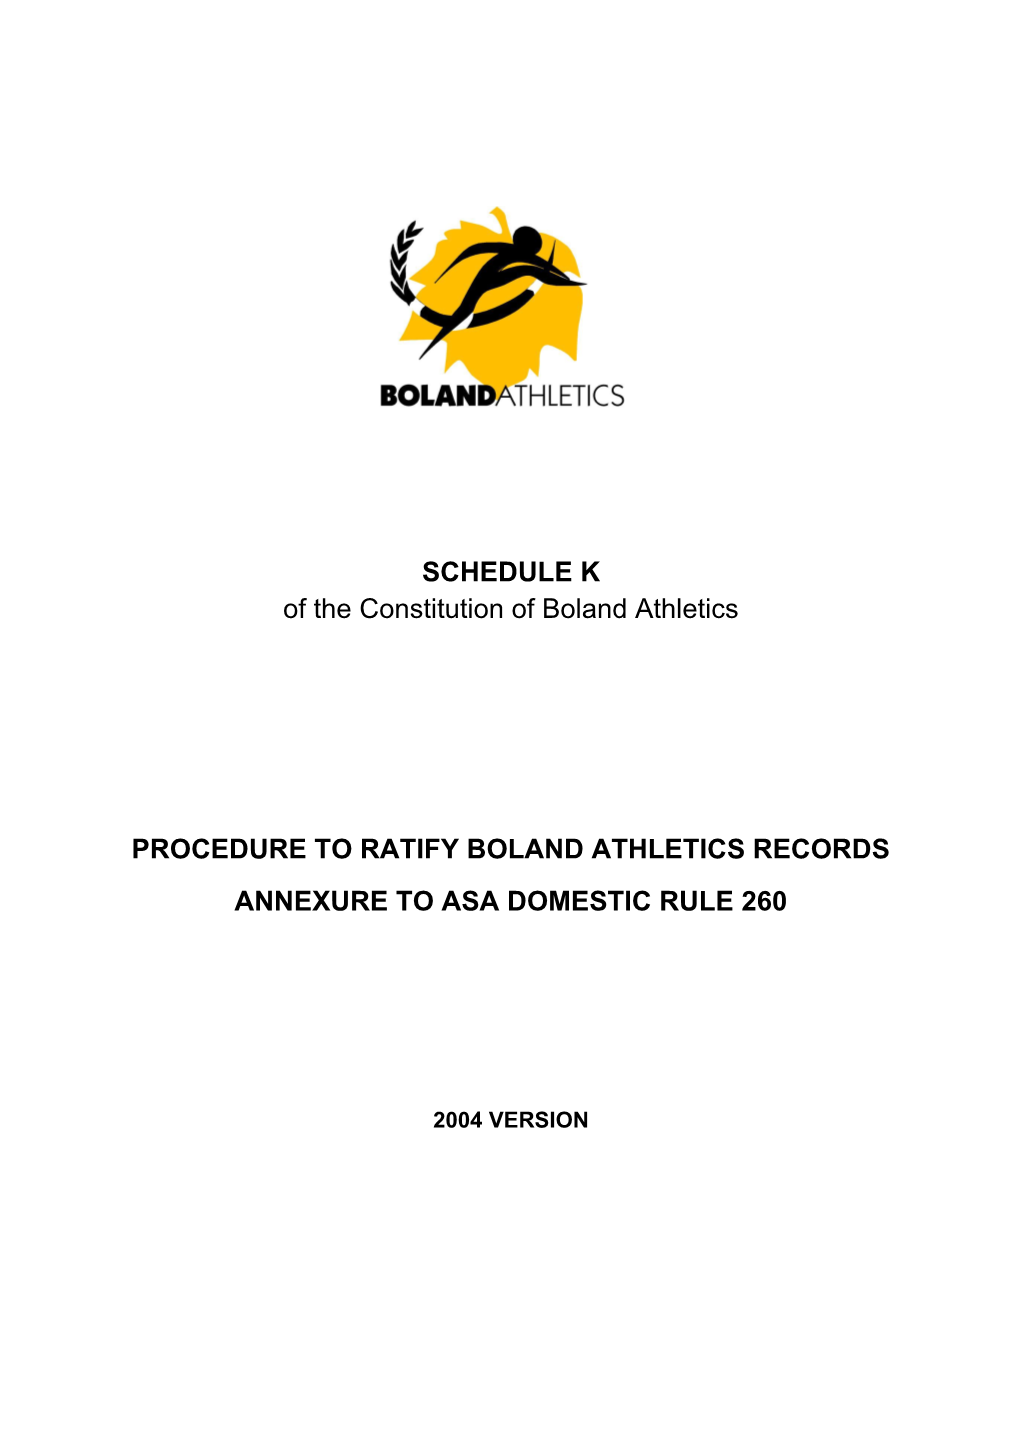 Procedure to Ratify Boland Athletics Records